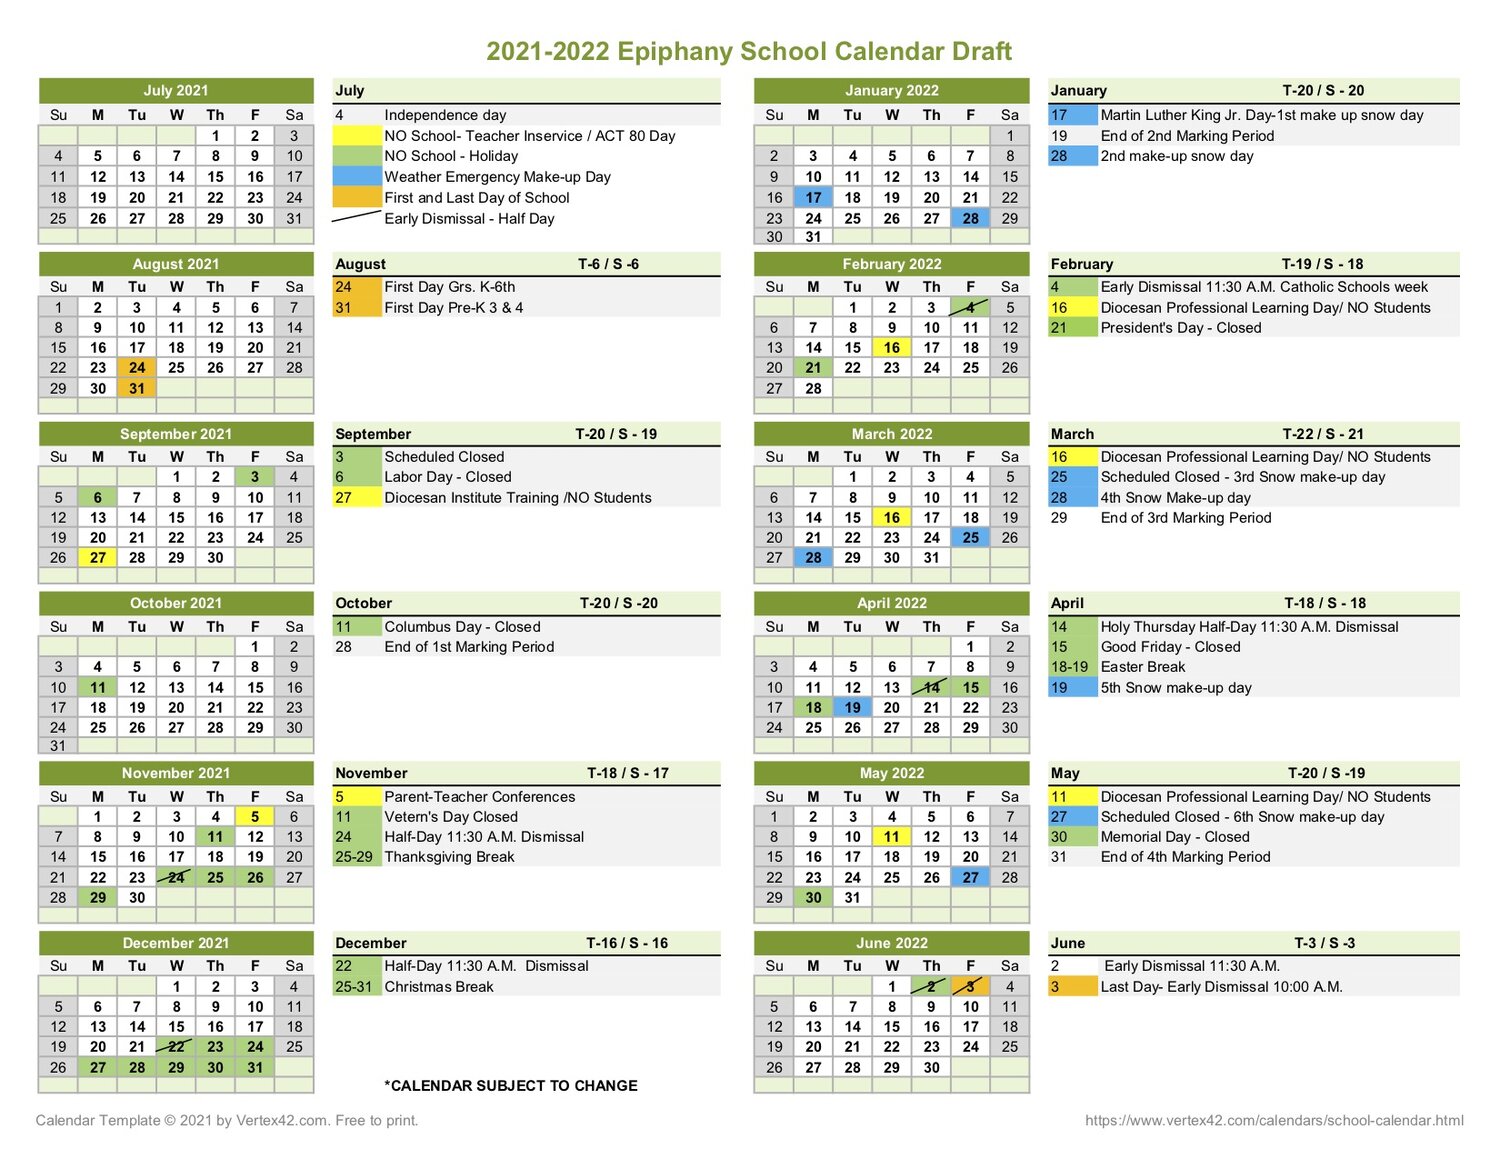 20212022 School Calendar (Draft) — The Epiphany School